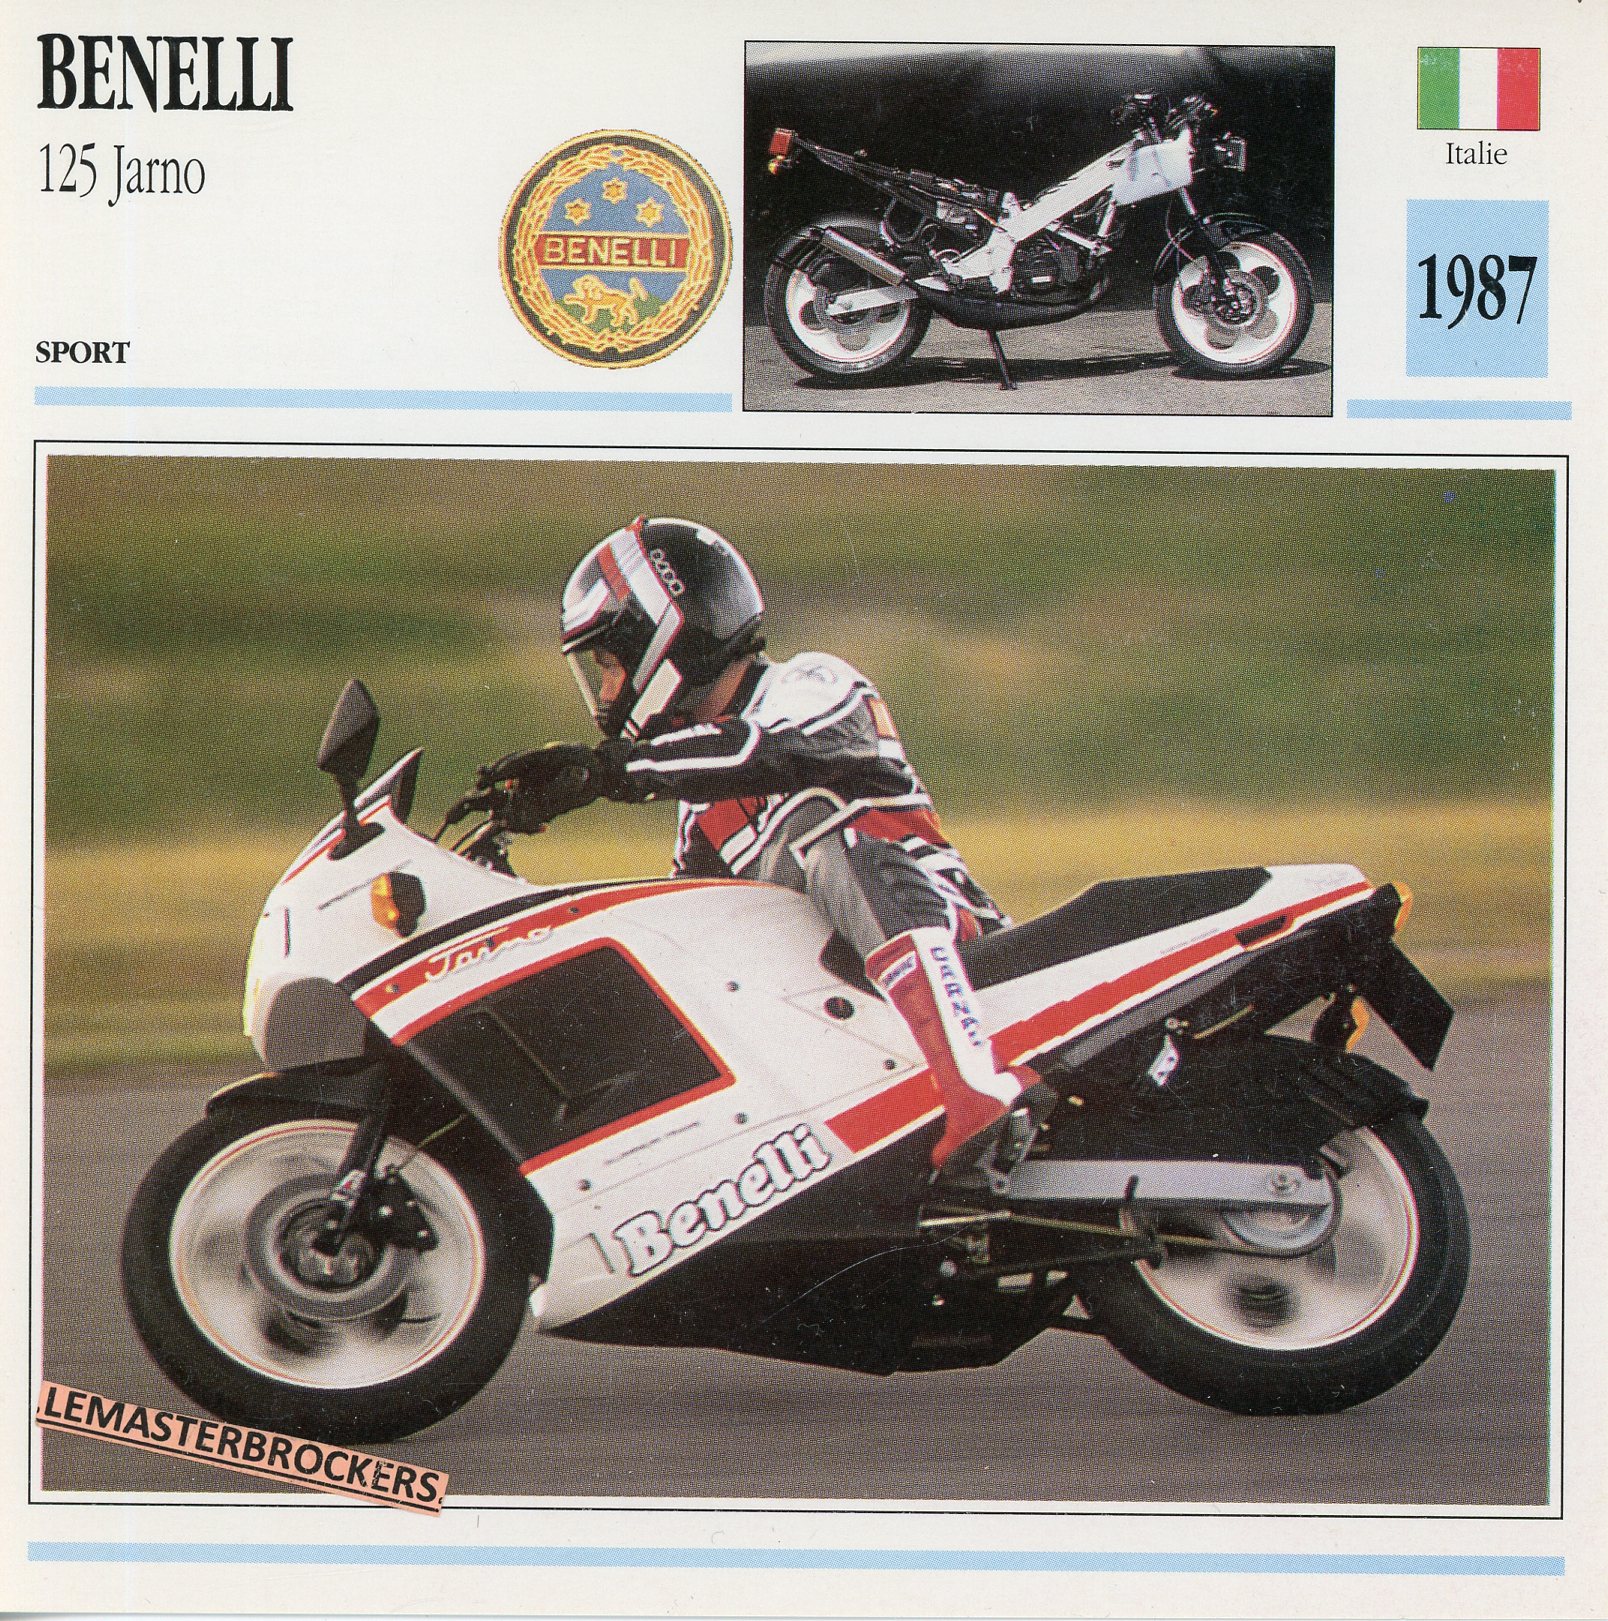 BENELLI-125-JARNO-1987-LEMASTERBROCKERS-FICHE-MOTO-ATLAS-CARD